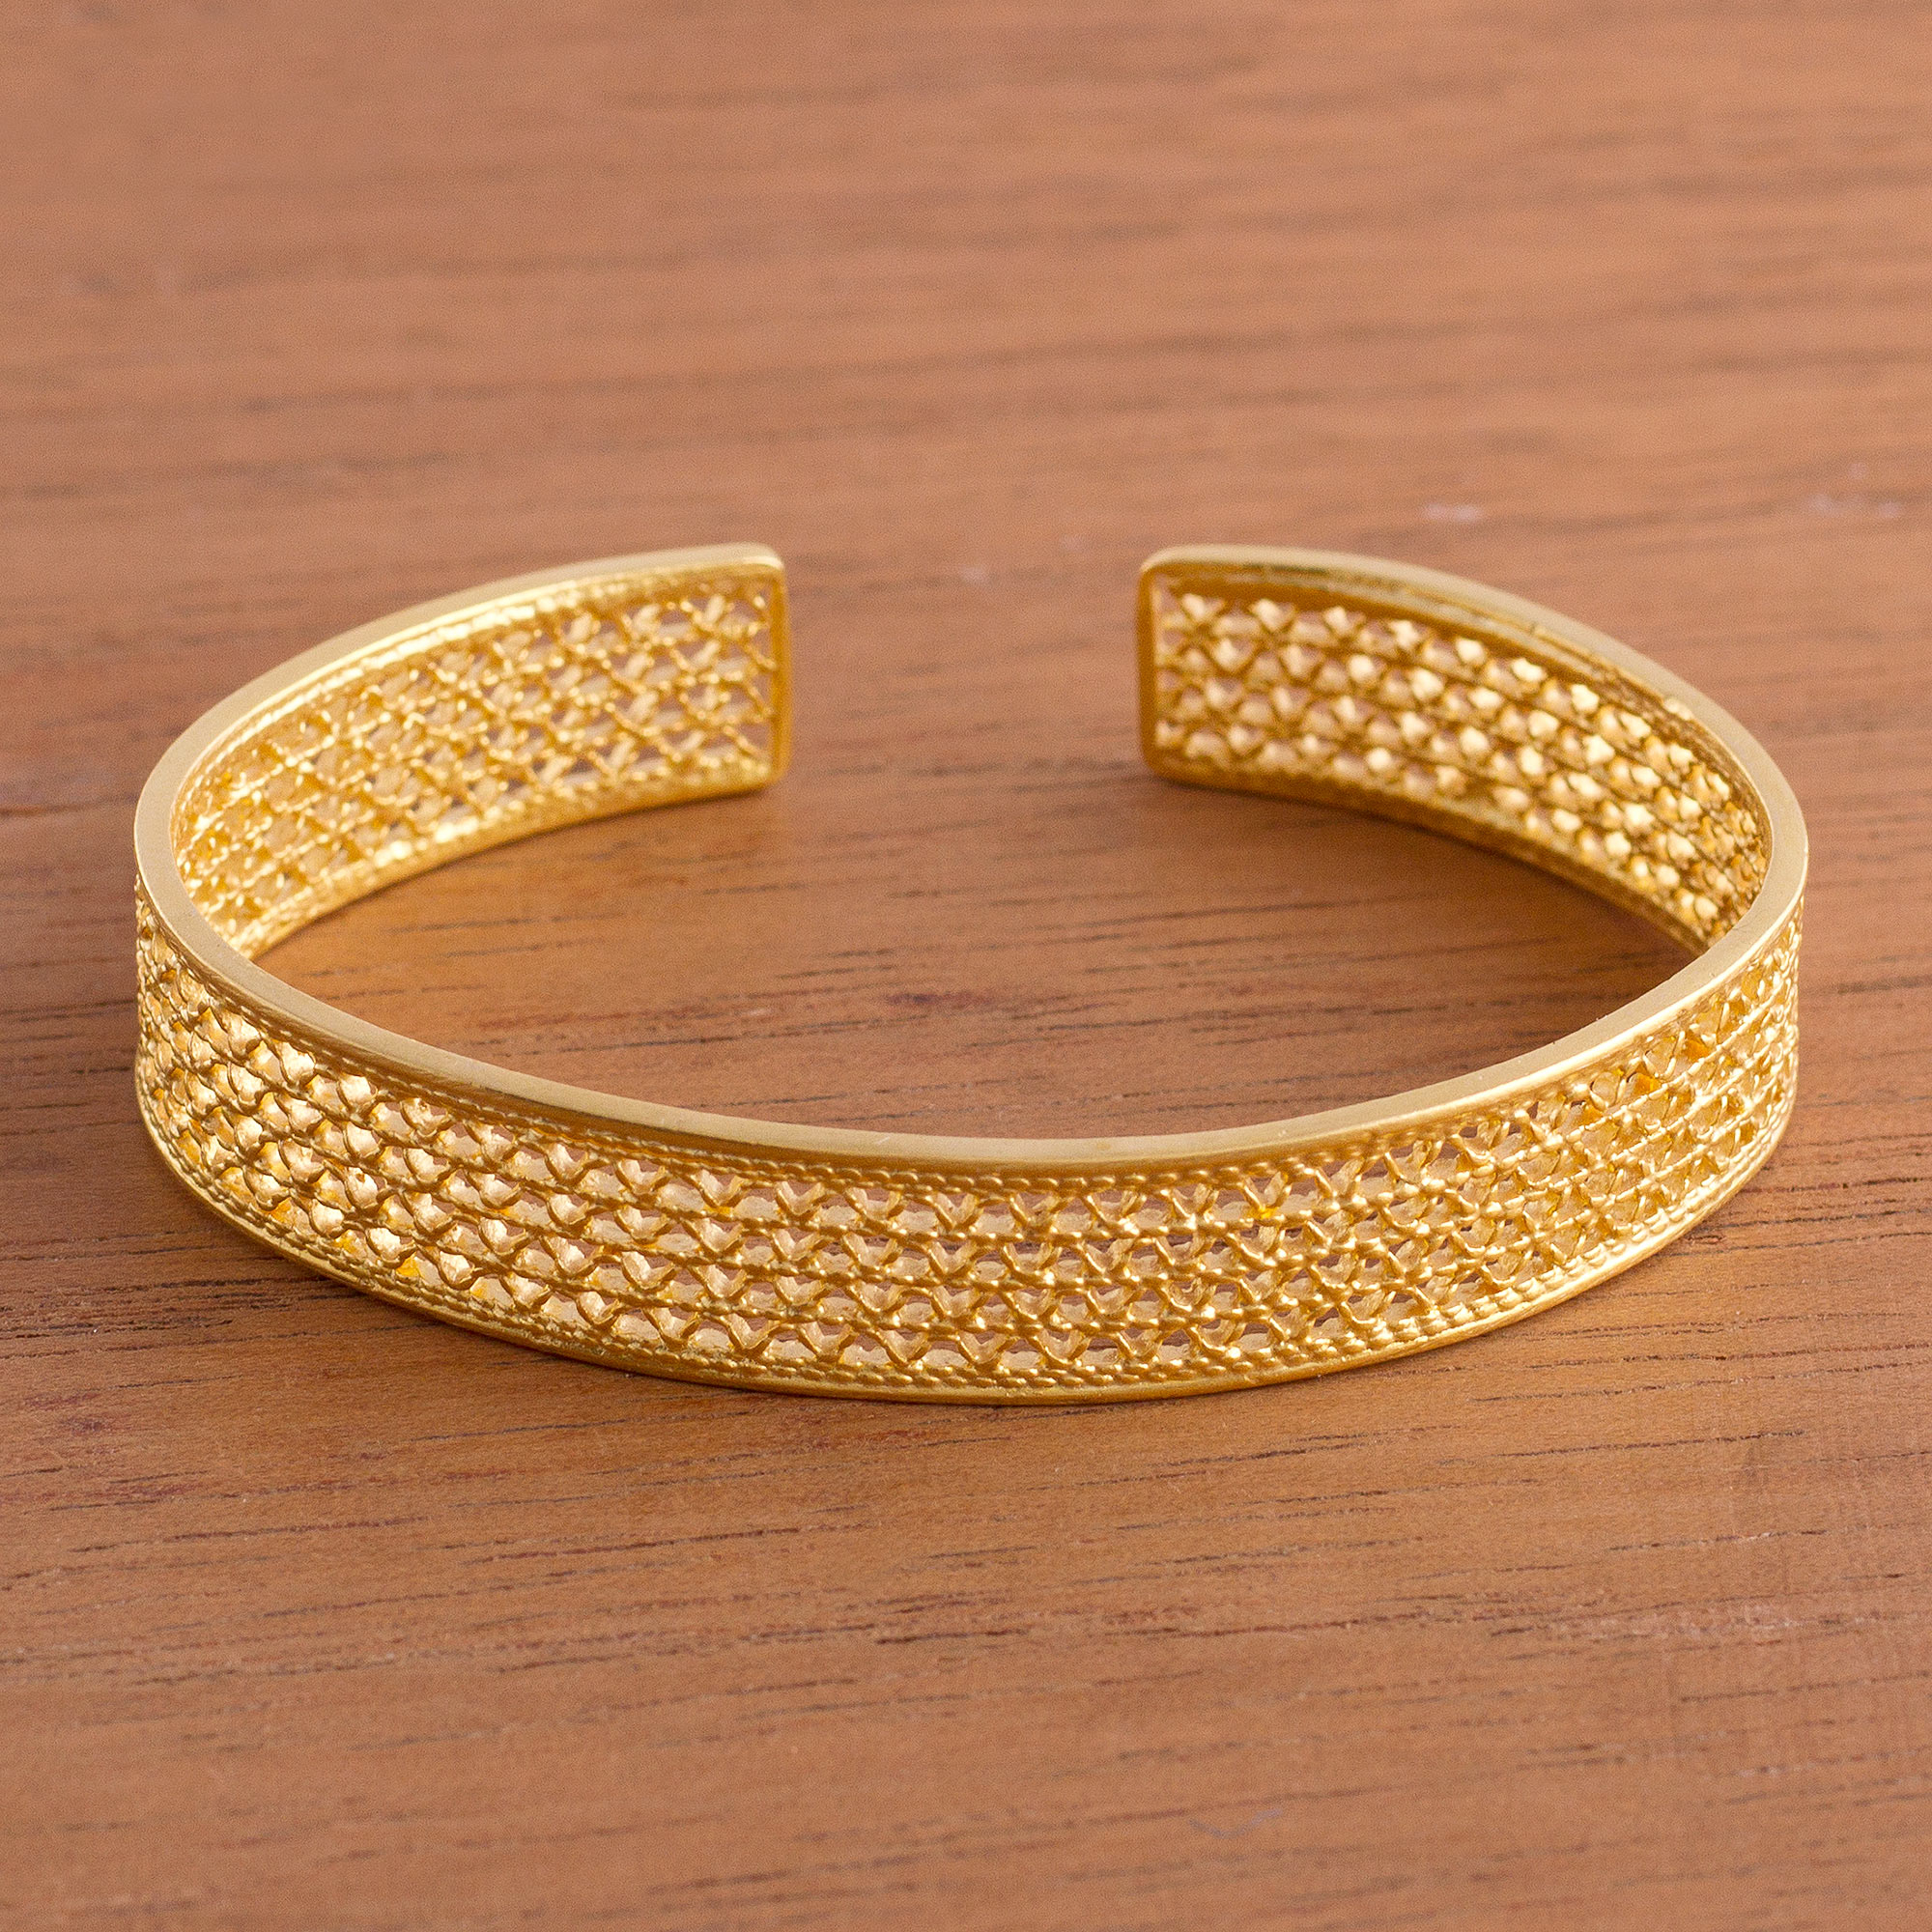 Custom made gold bracelets ipad air 2 retina display amazon